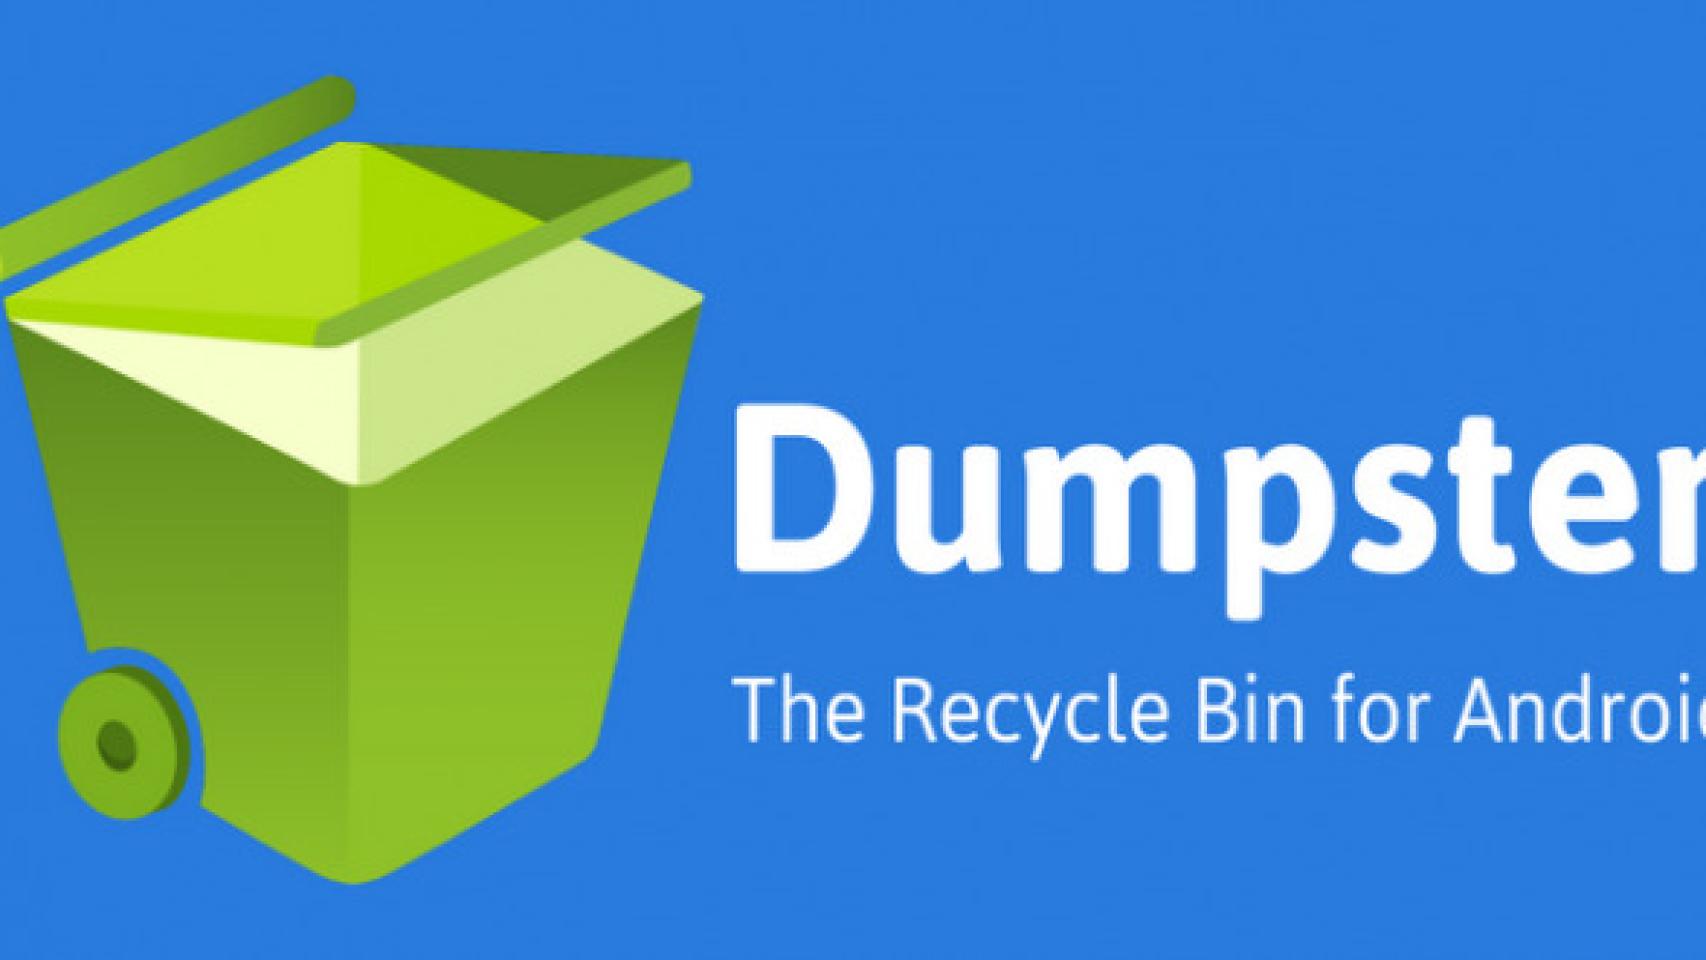 Dumpster: Una completa papelera de reciclaje para tu Android